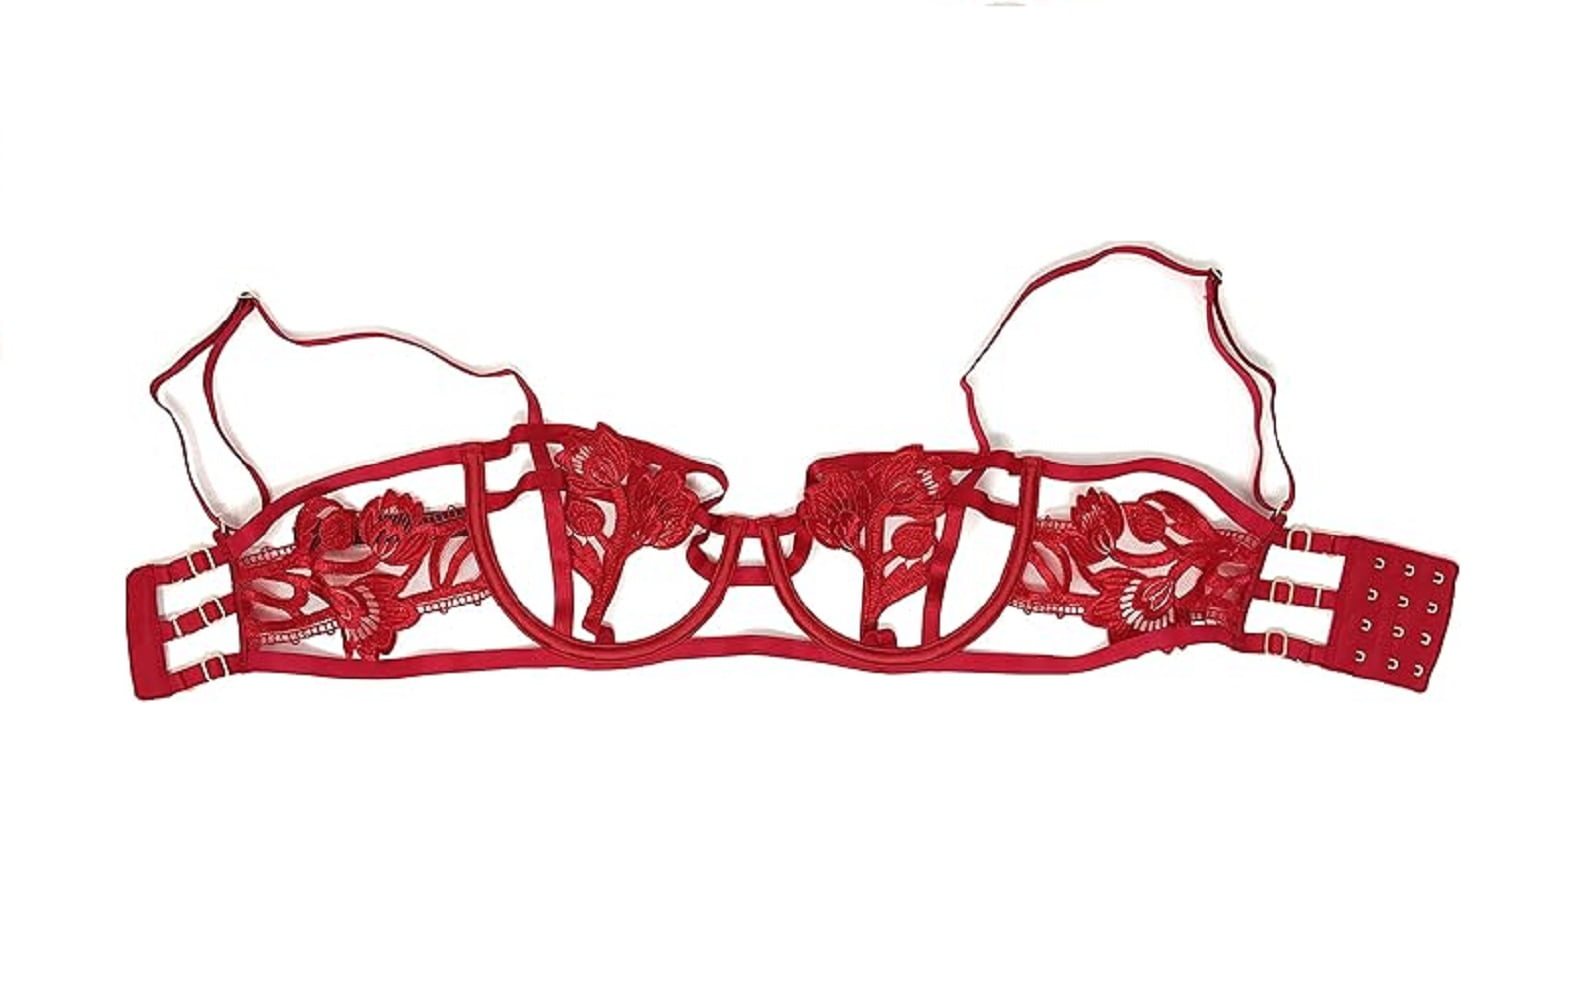 Victoria's Secret Underwire Strappy Unlined Plunge Bra - Red - 38DD - NWT 